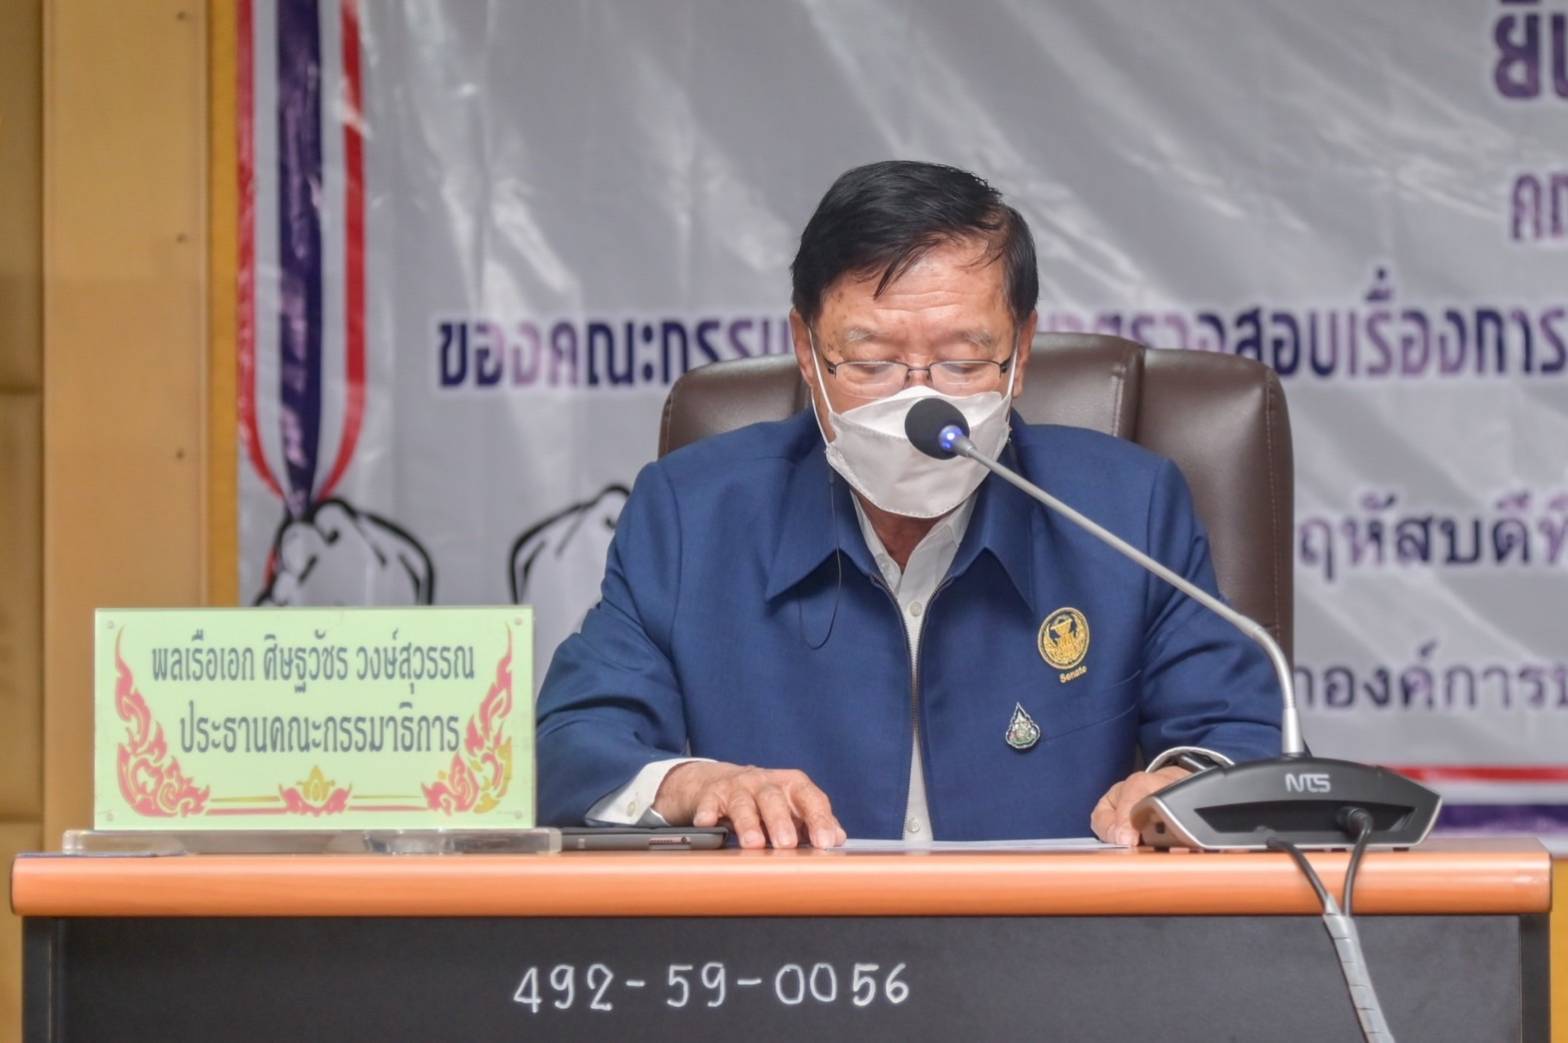 16 December 2021, at Ubon Ratchathani Provincial Administrative Organization,  Ubon Ratchathani Province